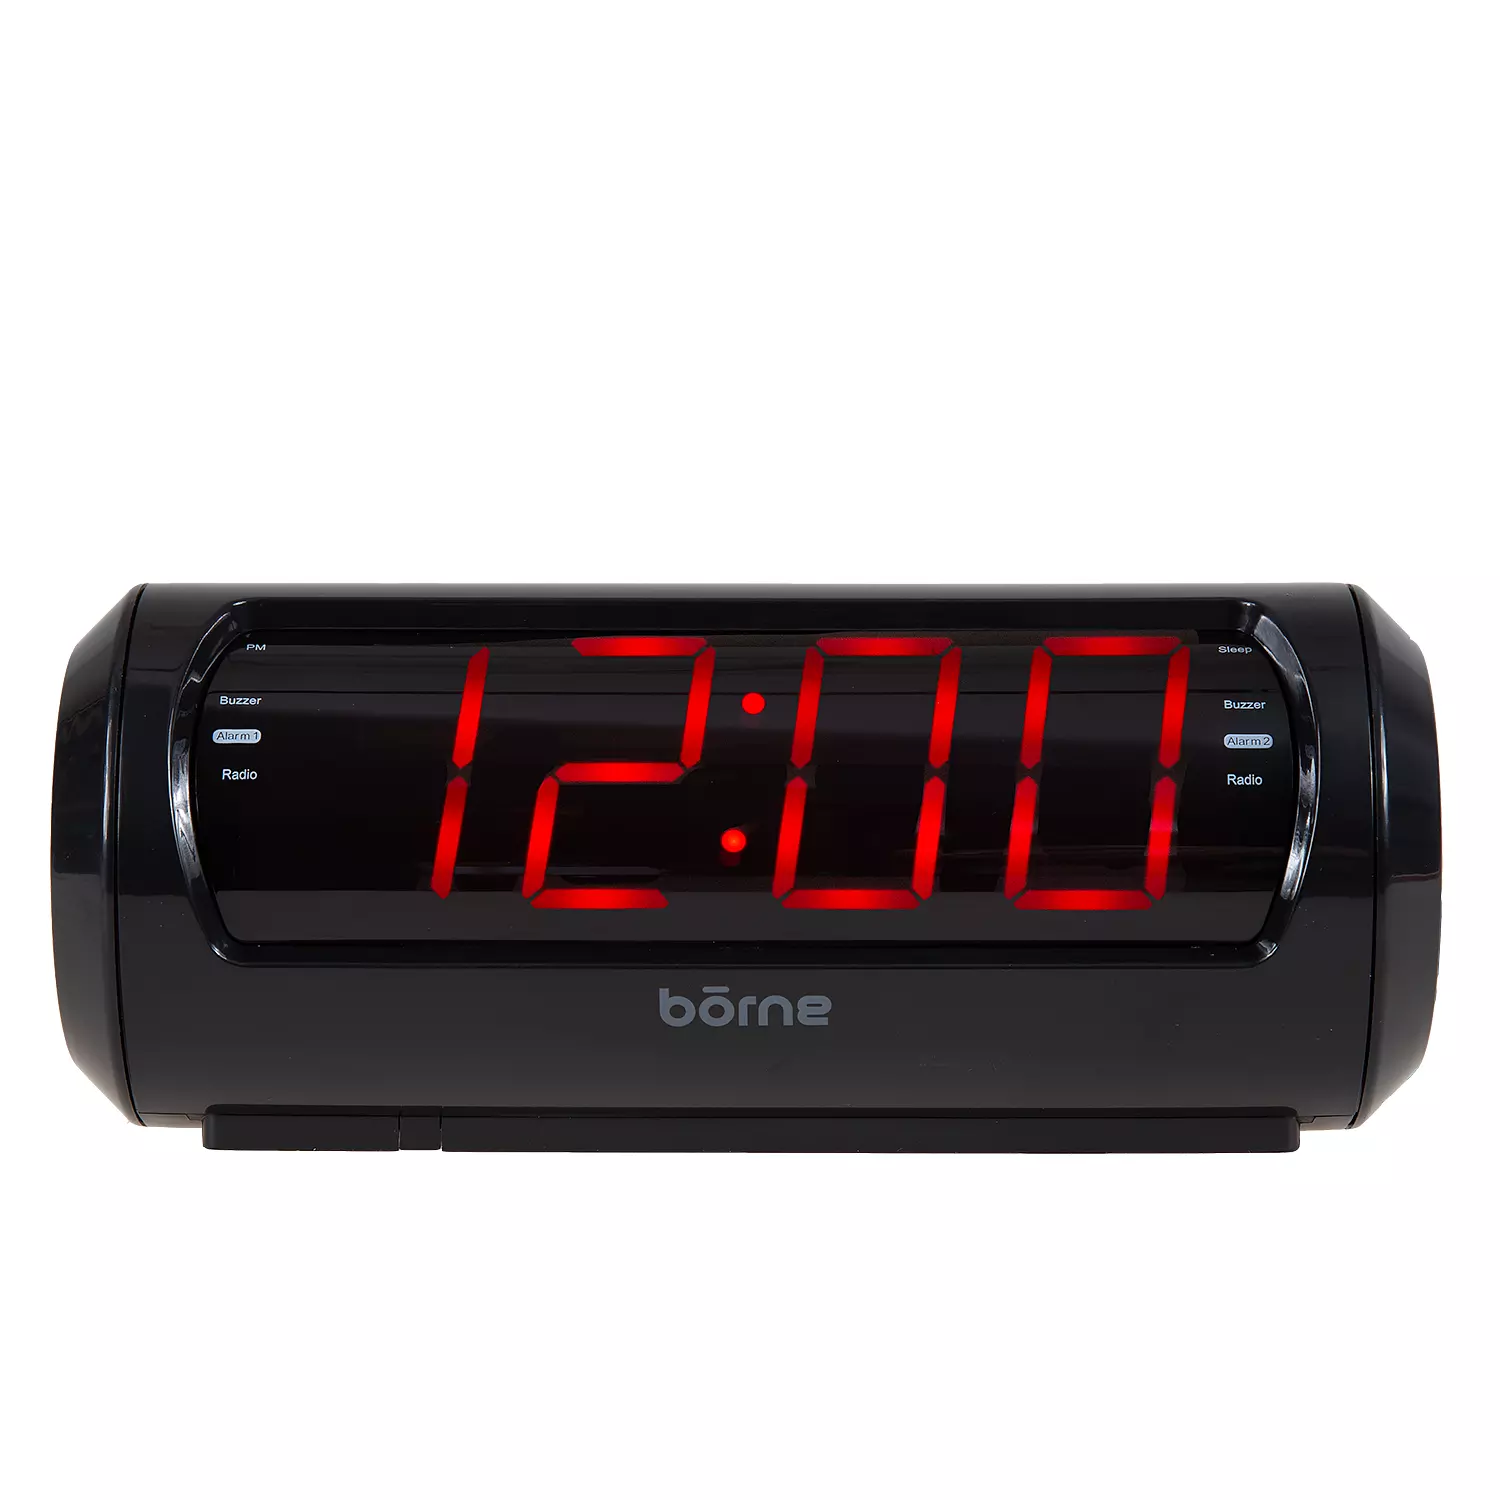 Borne - Digital  AM/FM clock radio with large display